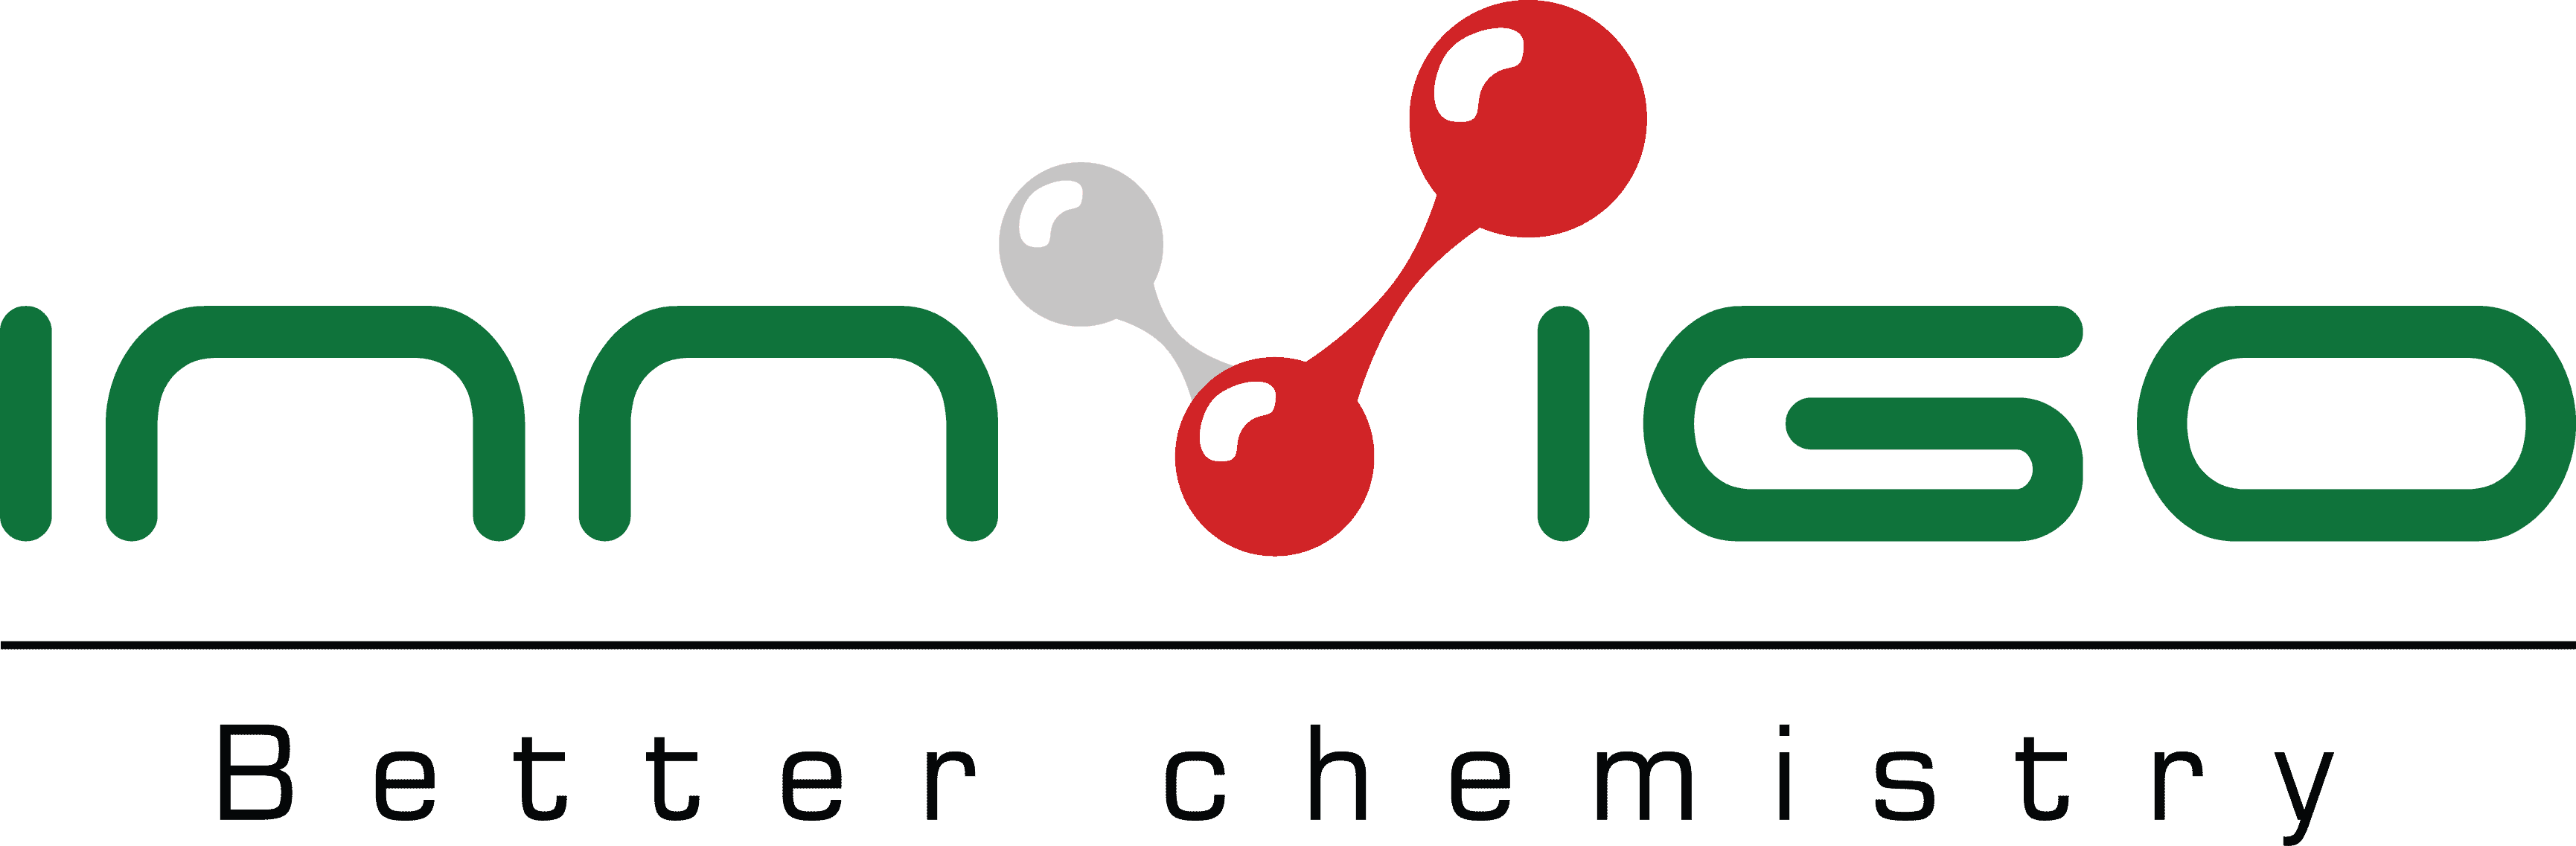 Innigo Better Chemistry